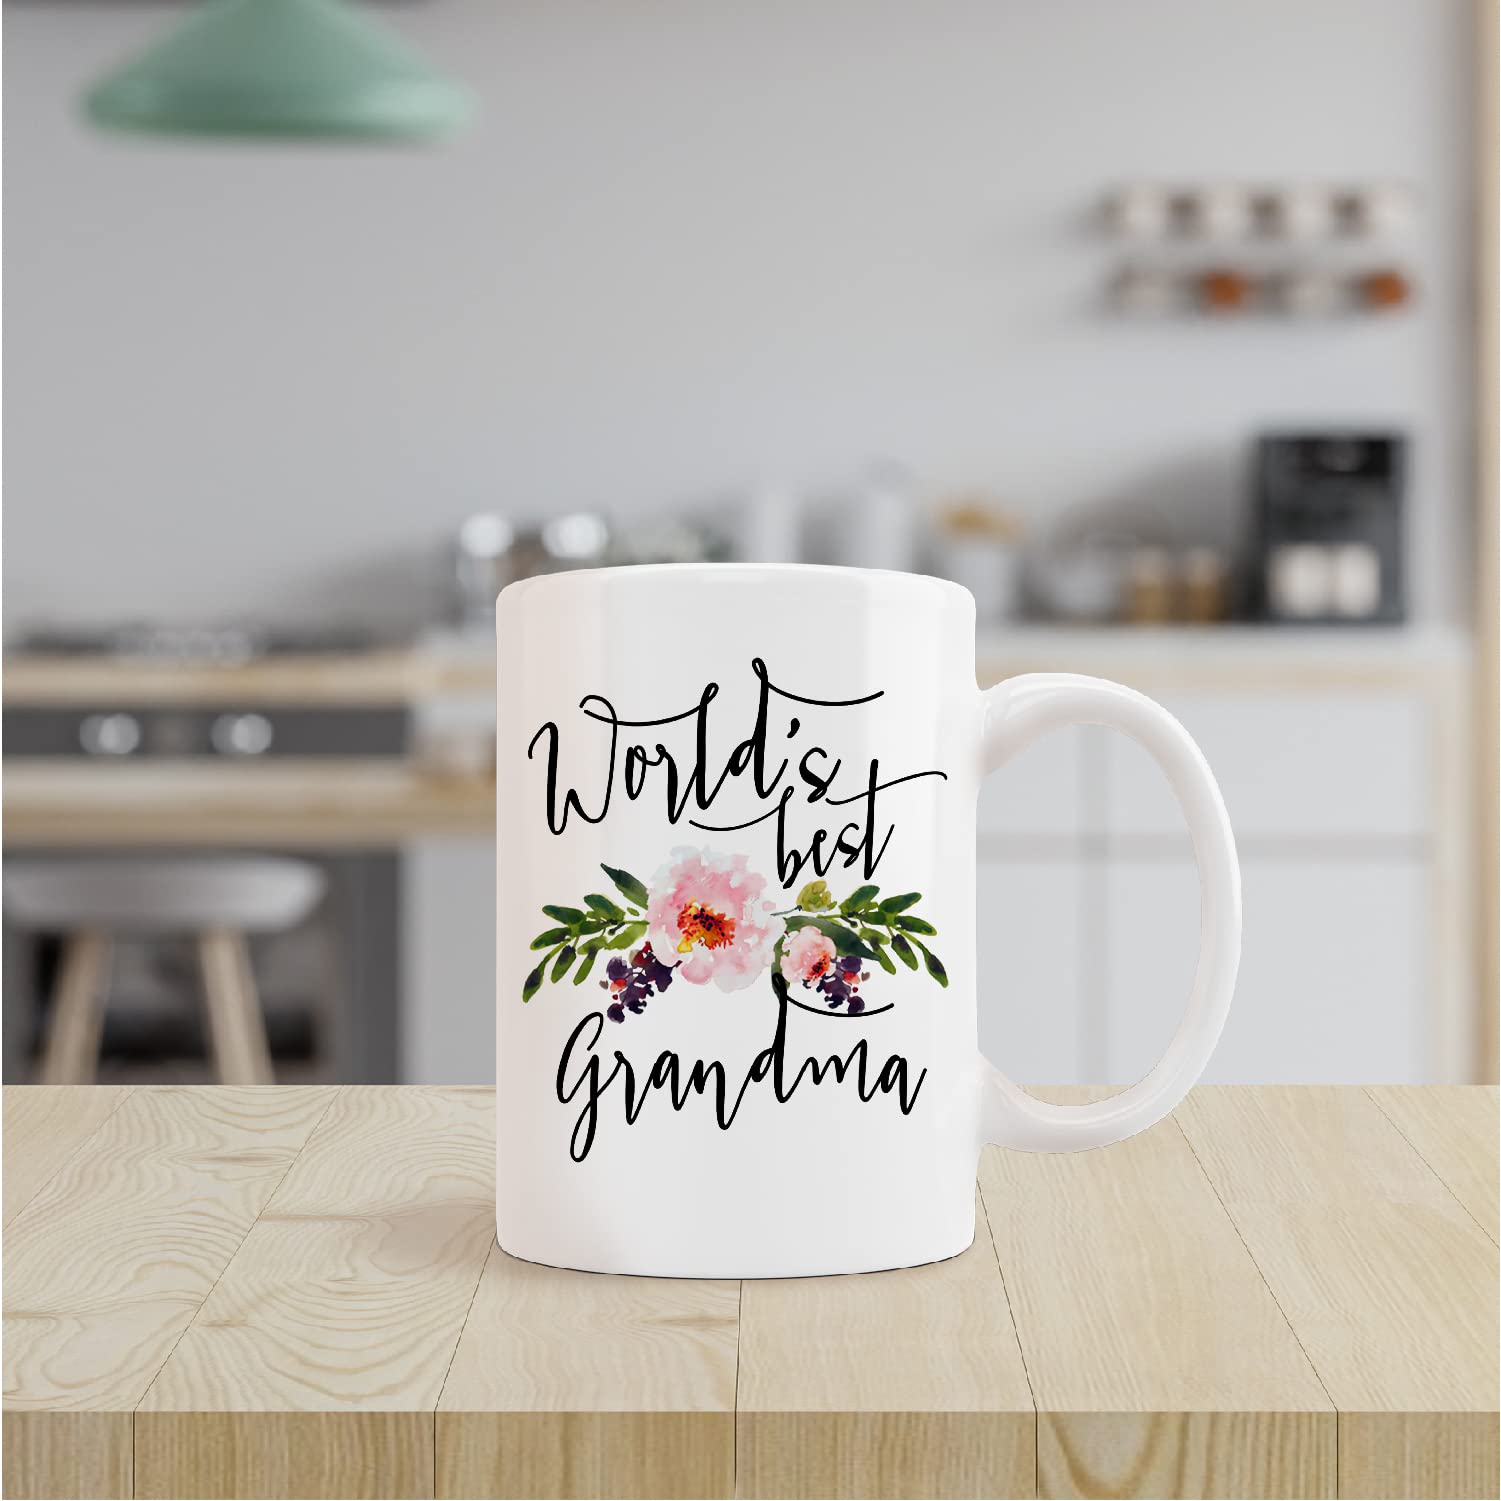 kunlisa Best Grandma Mug Cup,World's Best Grandma Floral Ceramic Mug-11oz Coffee Milk Tea Mug Cup,Grandmother Grandma Birthday Mother's Day Gifts From Grandson Granddaughter Grandkids